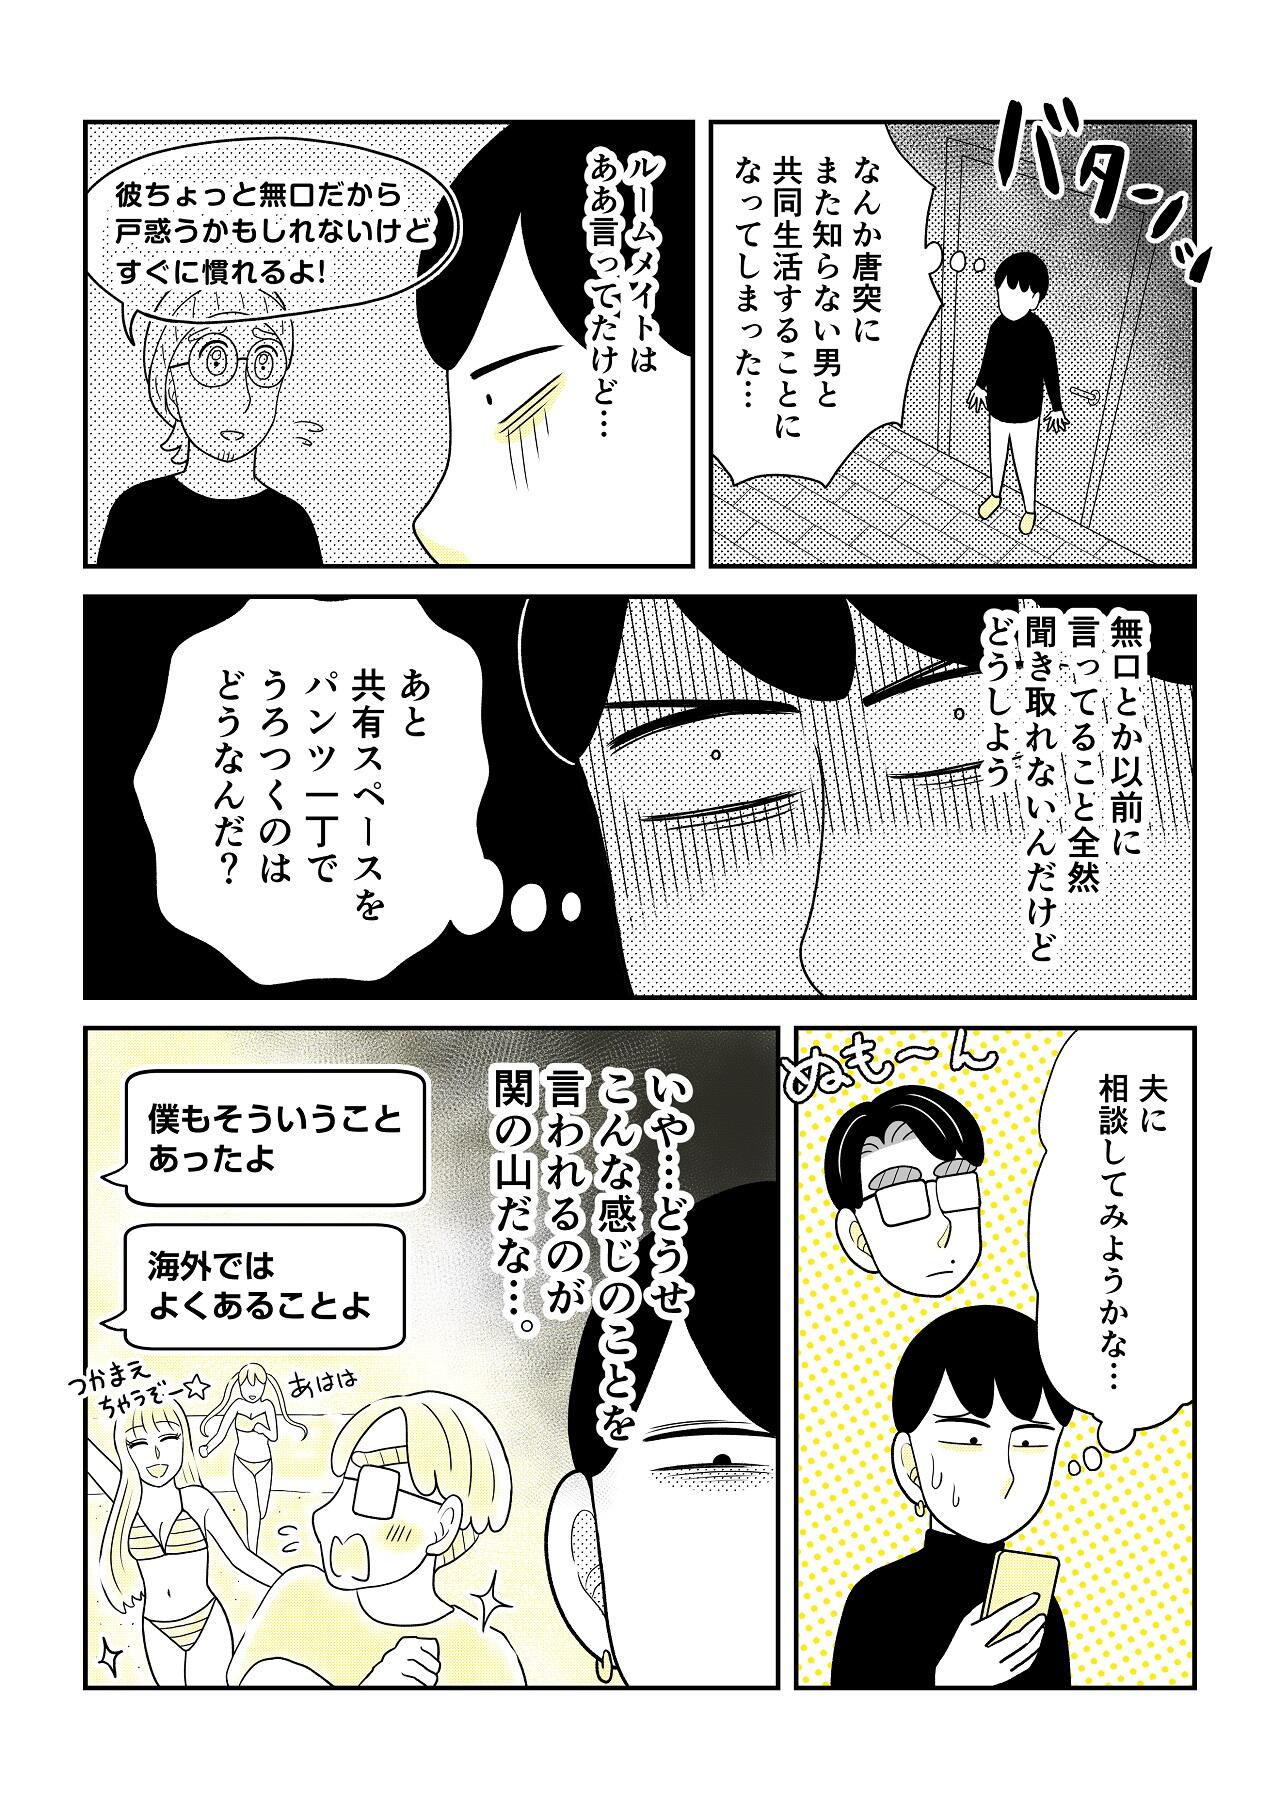 https://www.ryugaku.co.jp/column/images/24_07_1280.jpg